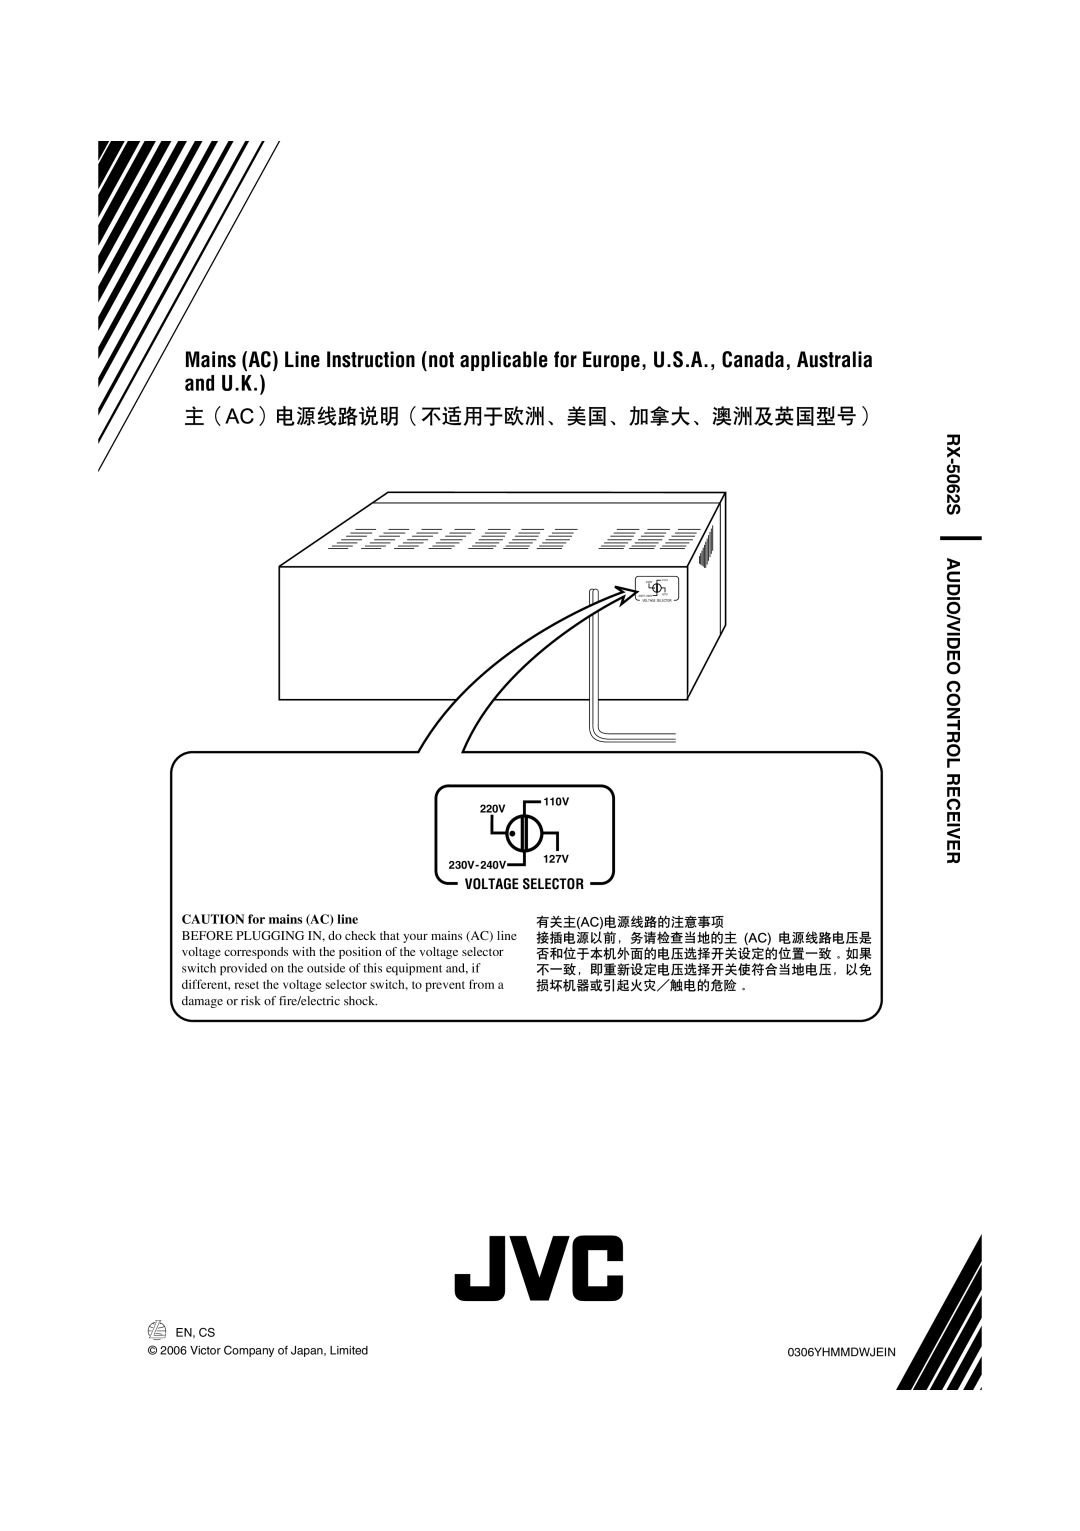 JVC LVT1507-012A manual RX-5062S, Receiver, Voltage Selector, CAUTION for mains AC line 